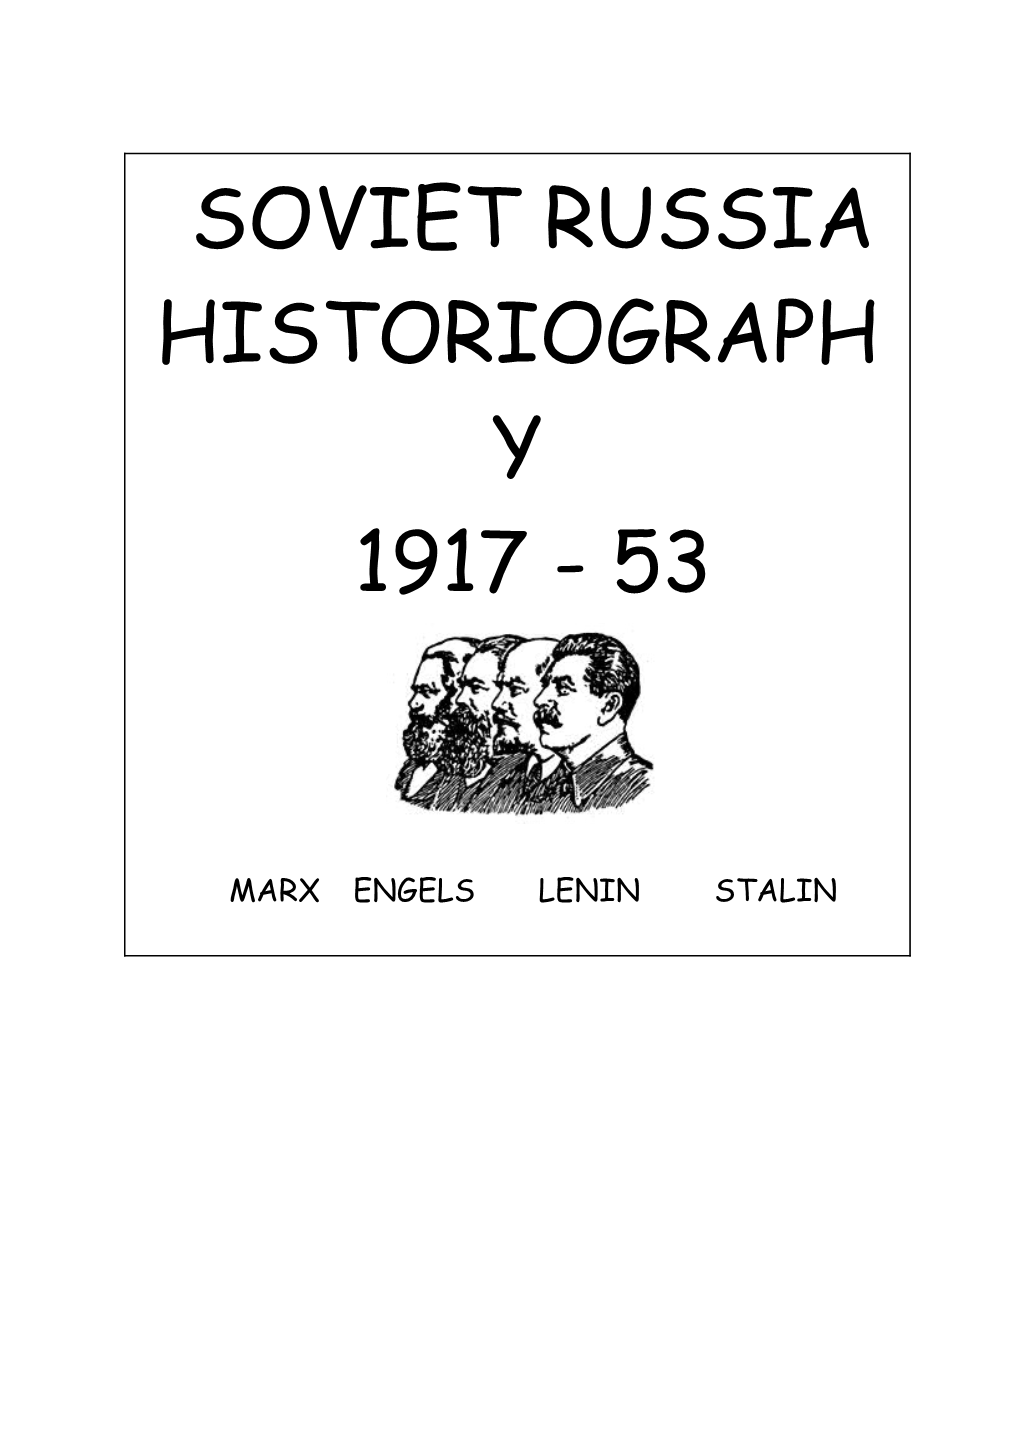 Soviet Russia Historiography